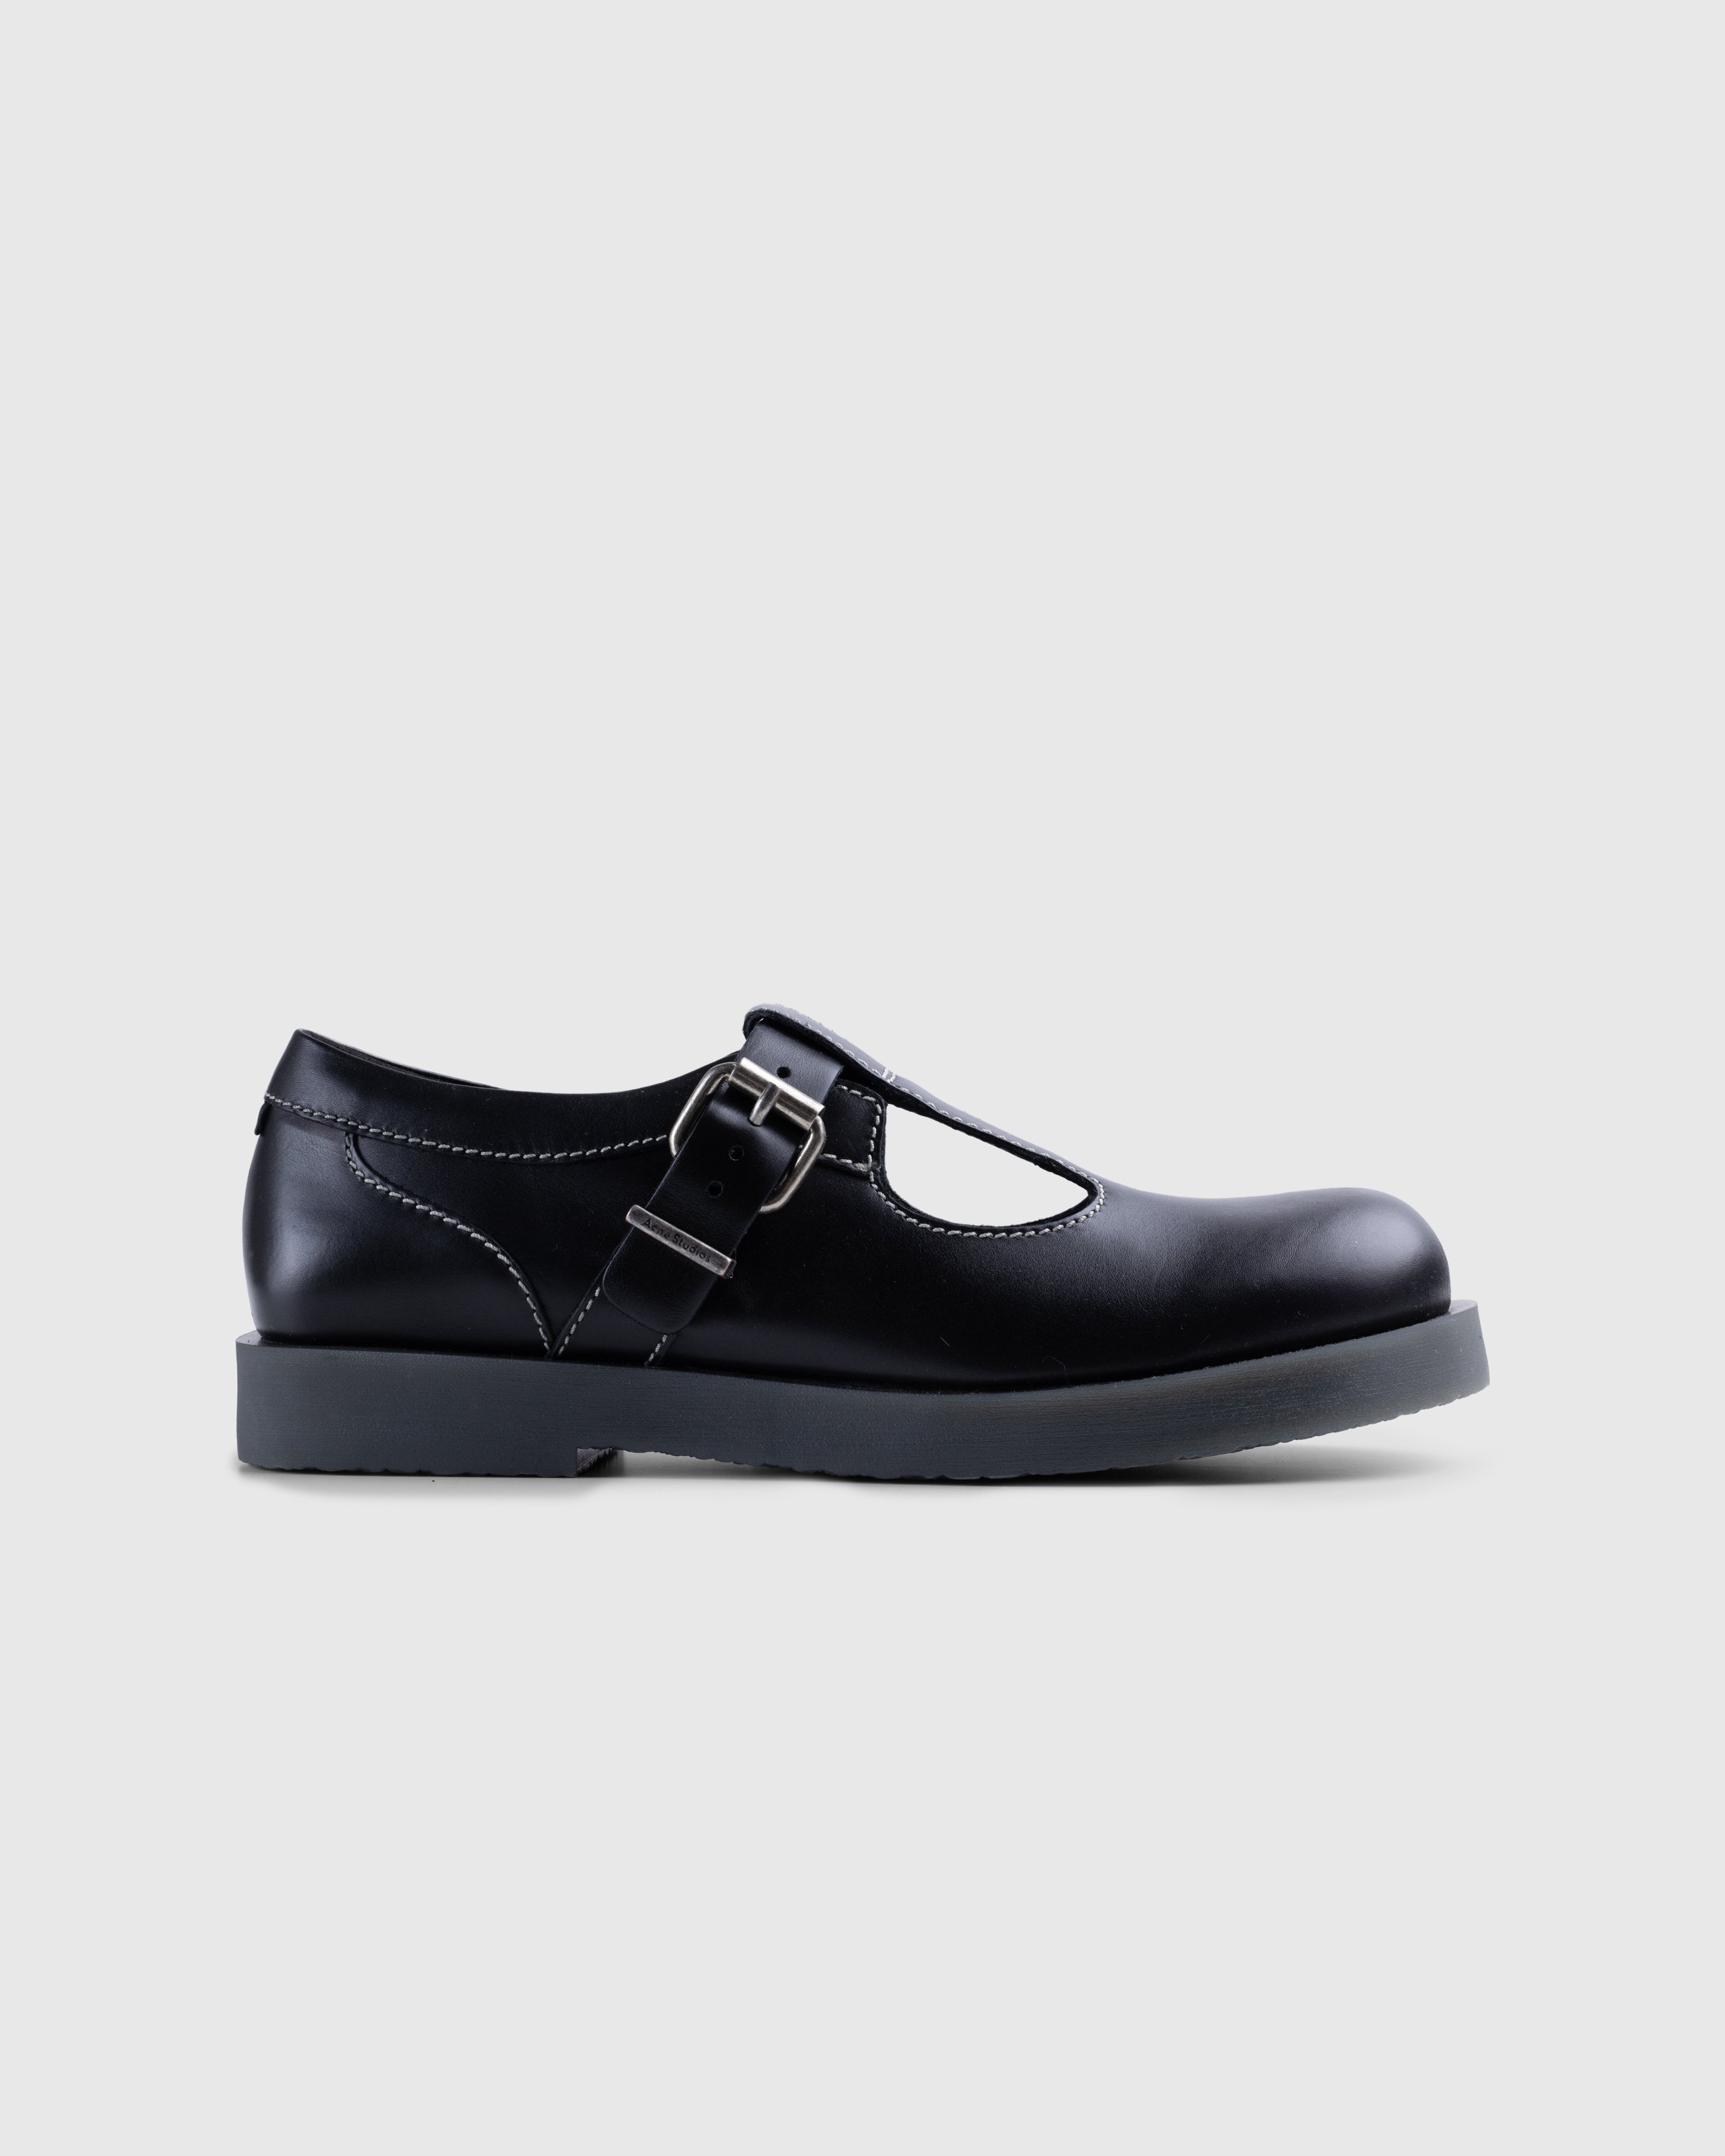 Acne Studios – Berylab Leather Buckle Shoes Black | Highsnobiety Shop